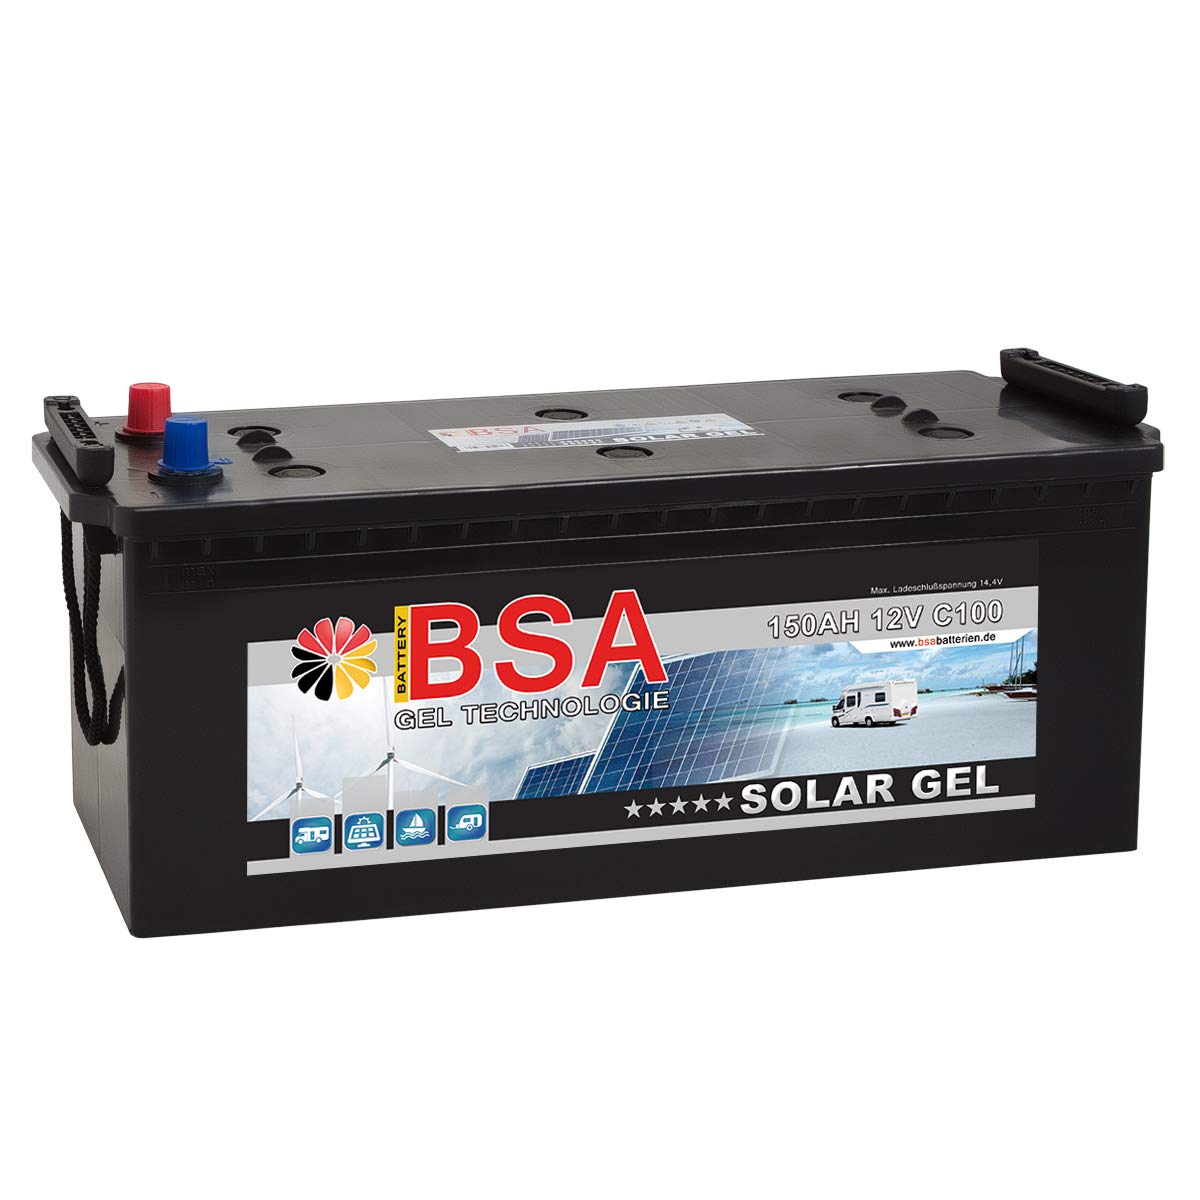 Gel Batterie 150Ah 12V Blei Gel Solarbatterie Wohnmobil Boot Versorgungsbatterie statt 120Ah 130Ah 140Ah von BSA BATTERY HIGH QUALITY BATTERIES